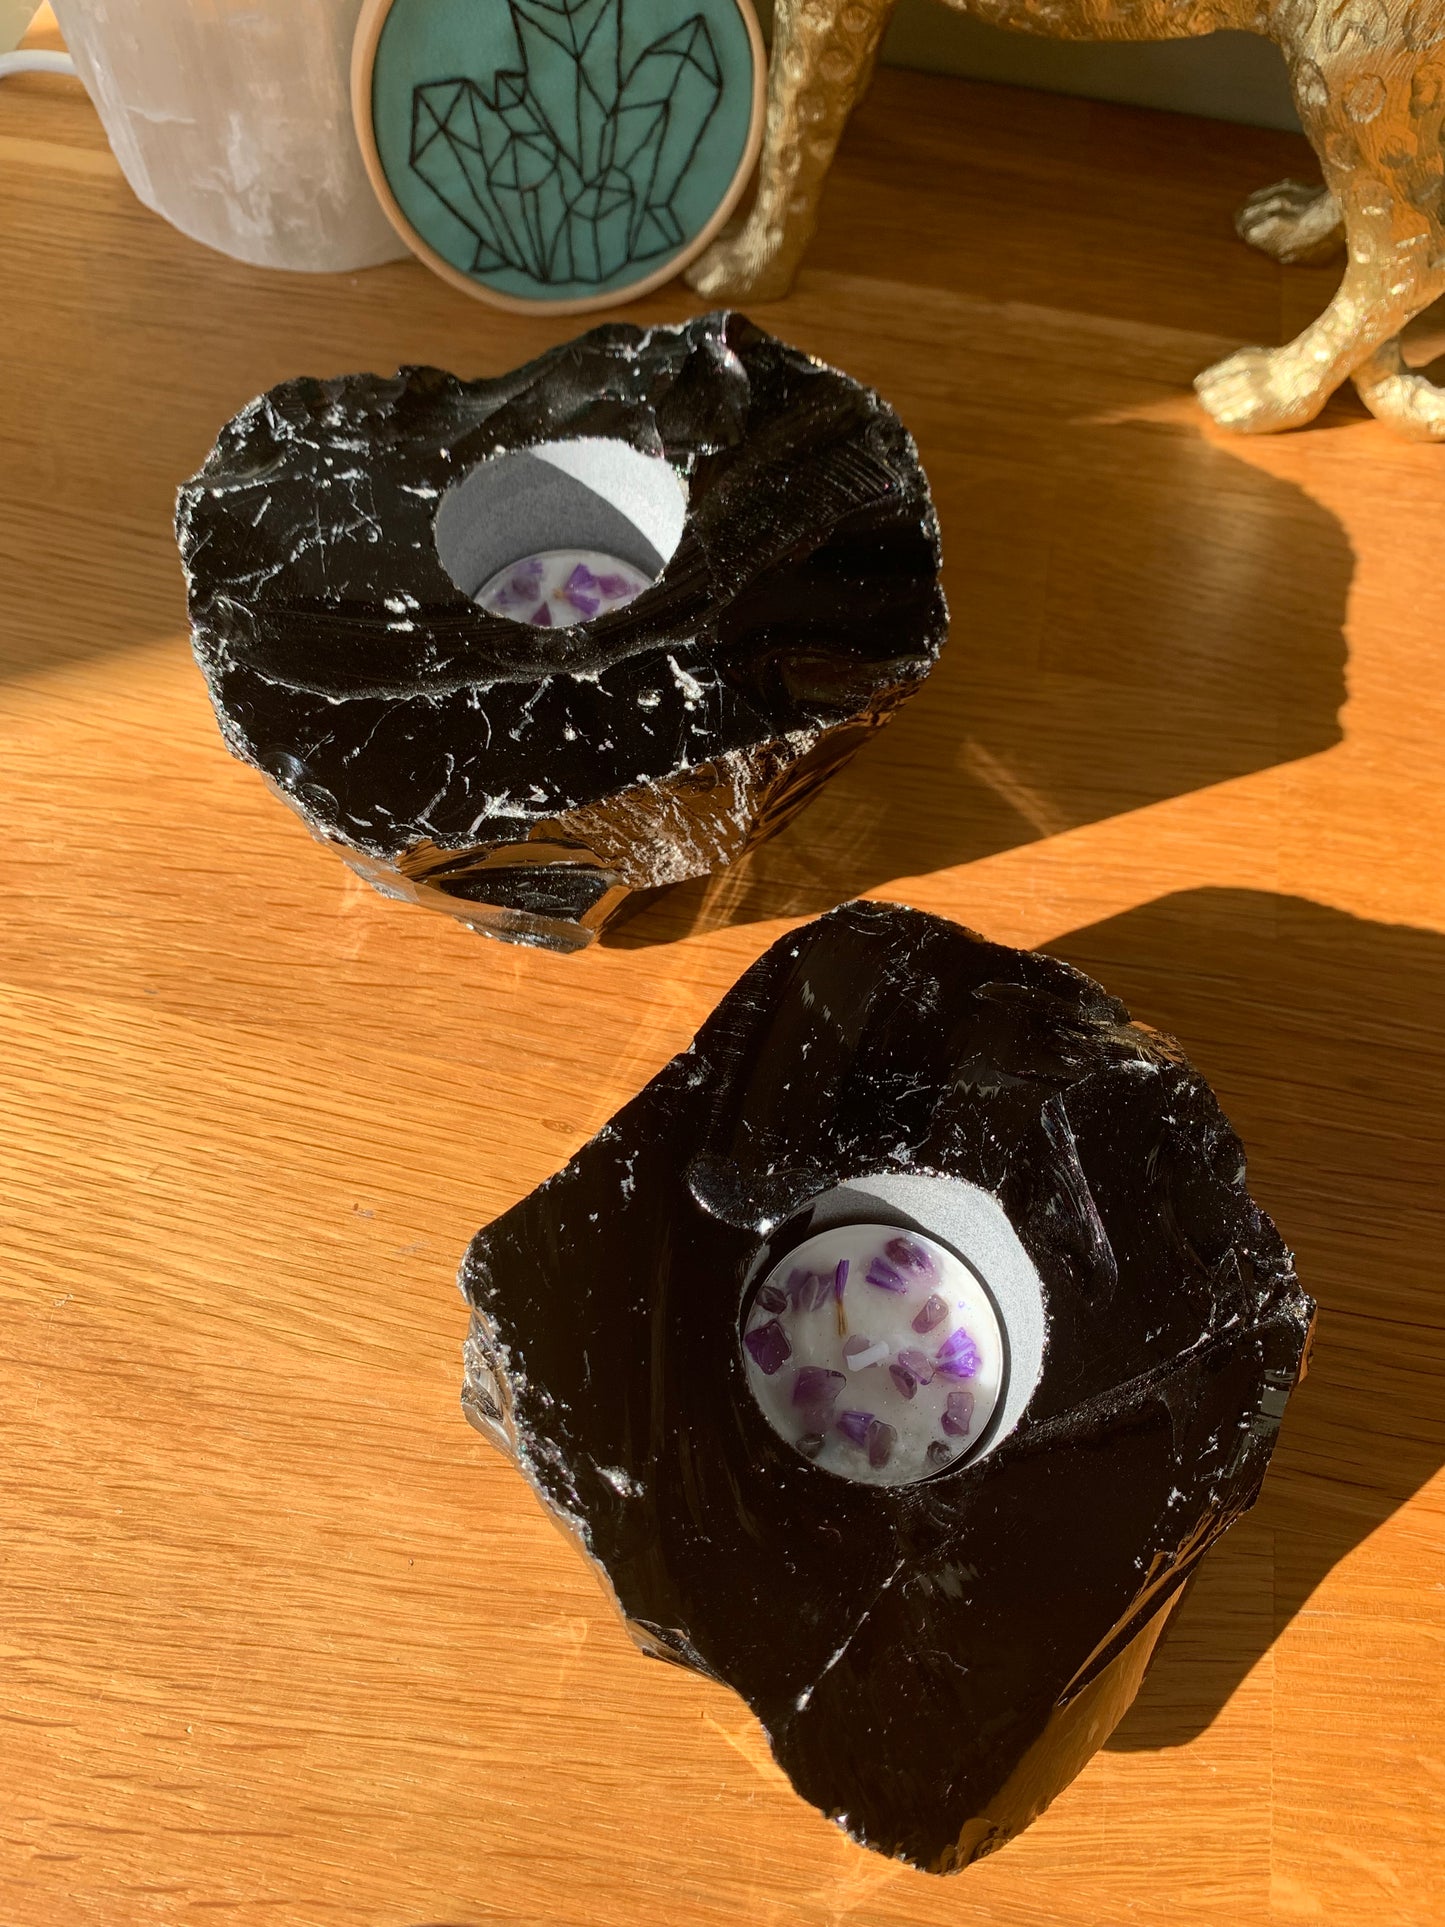 Black Obsidian Rough Crystal Tealight Candle Holder